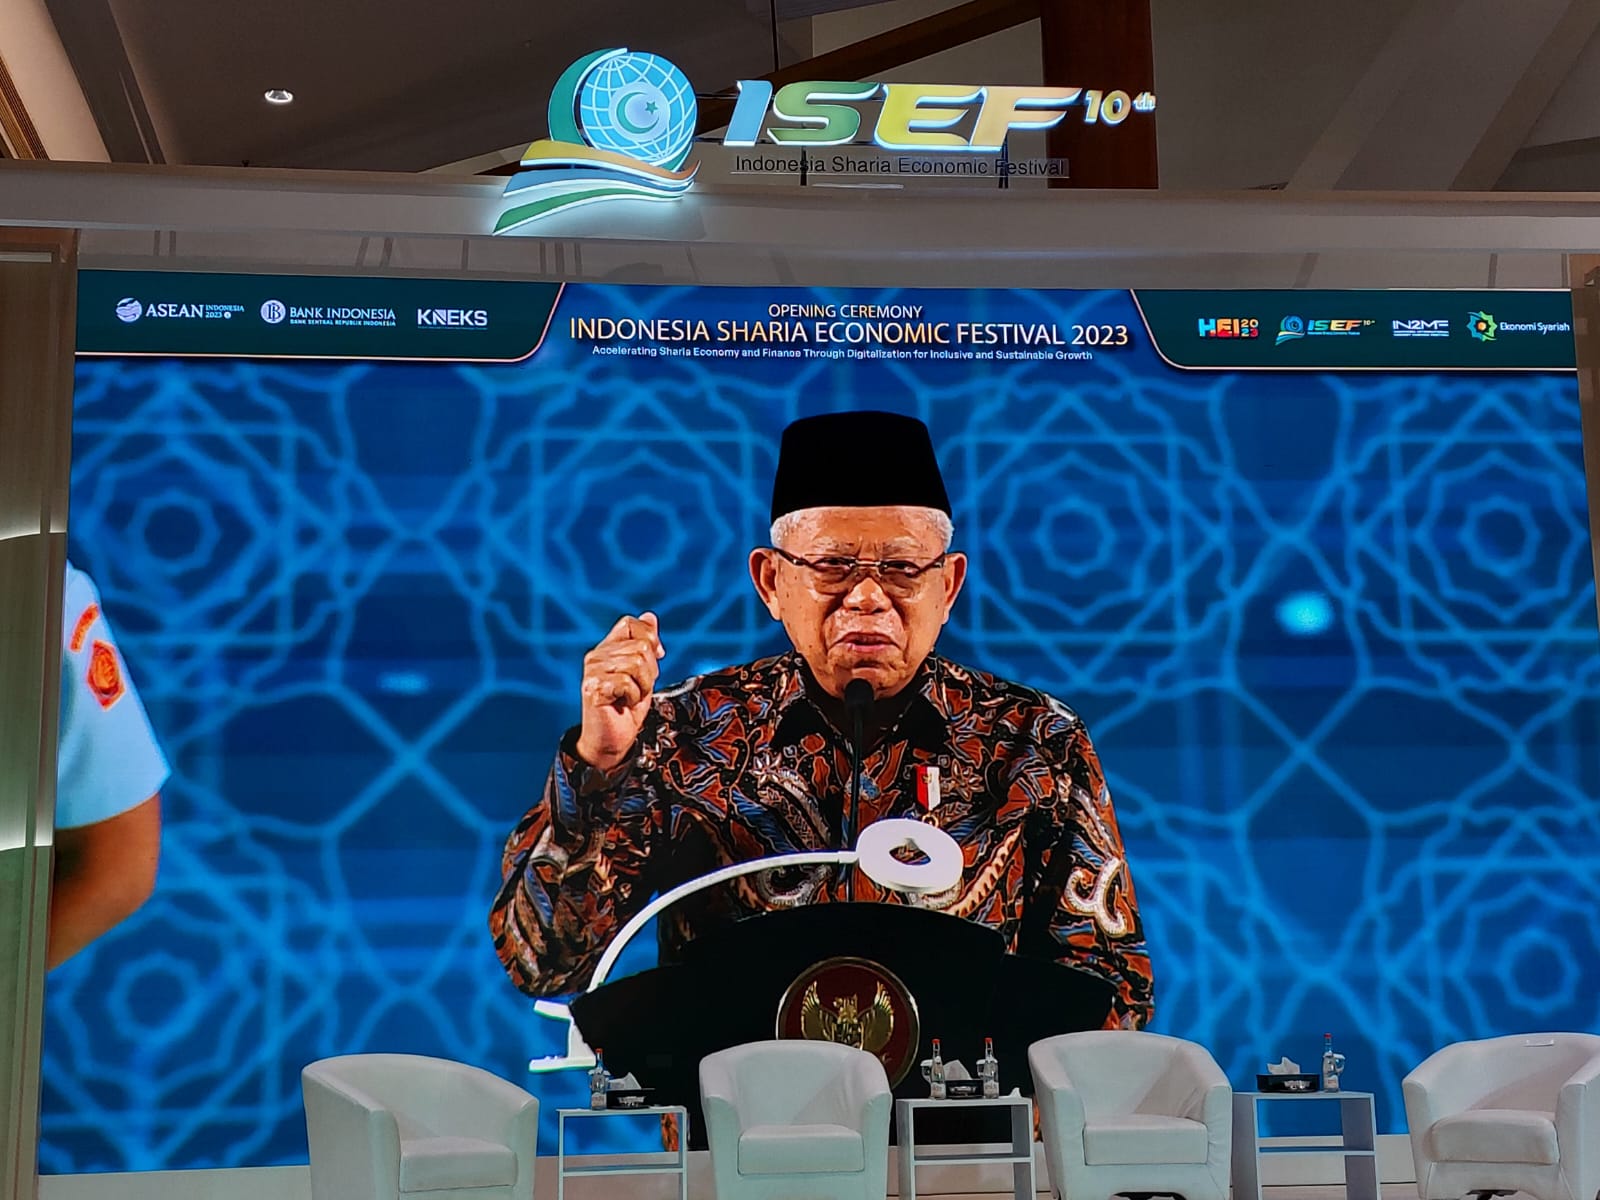 The Indonesia Sharia Economic Festival